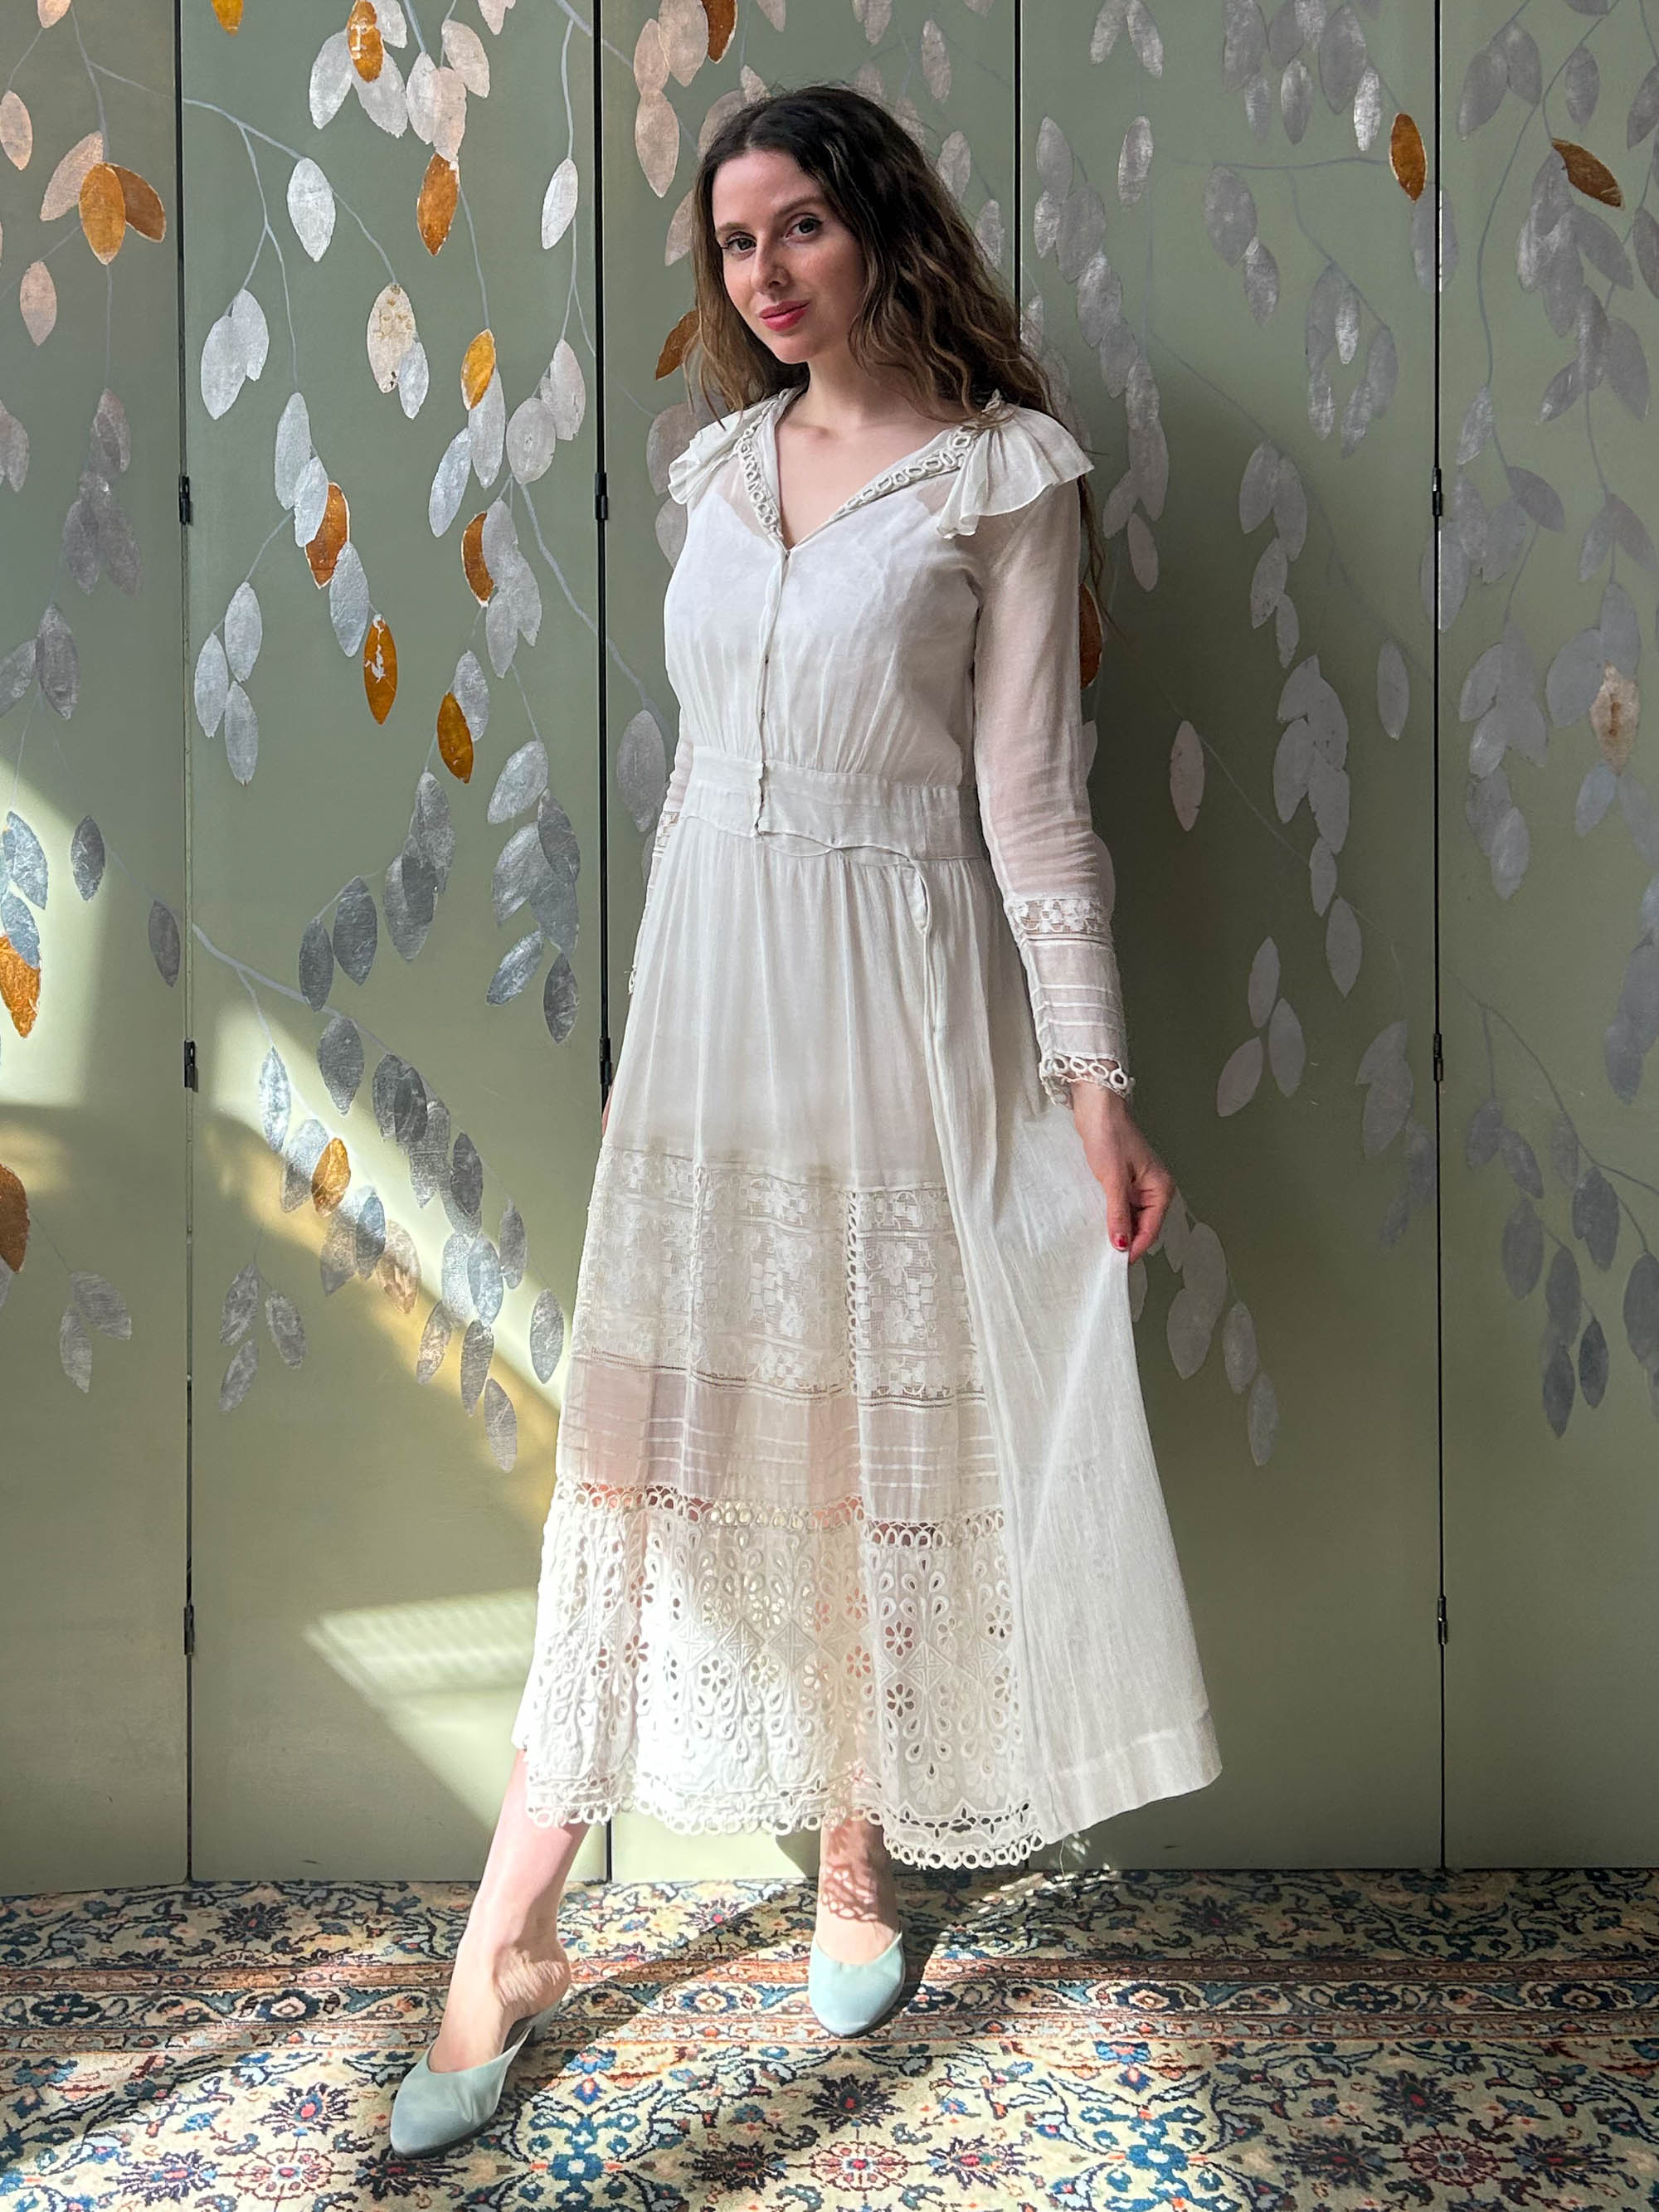 Antique Edwardian White Cotton Dress with Ruffle Collar